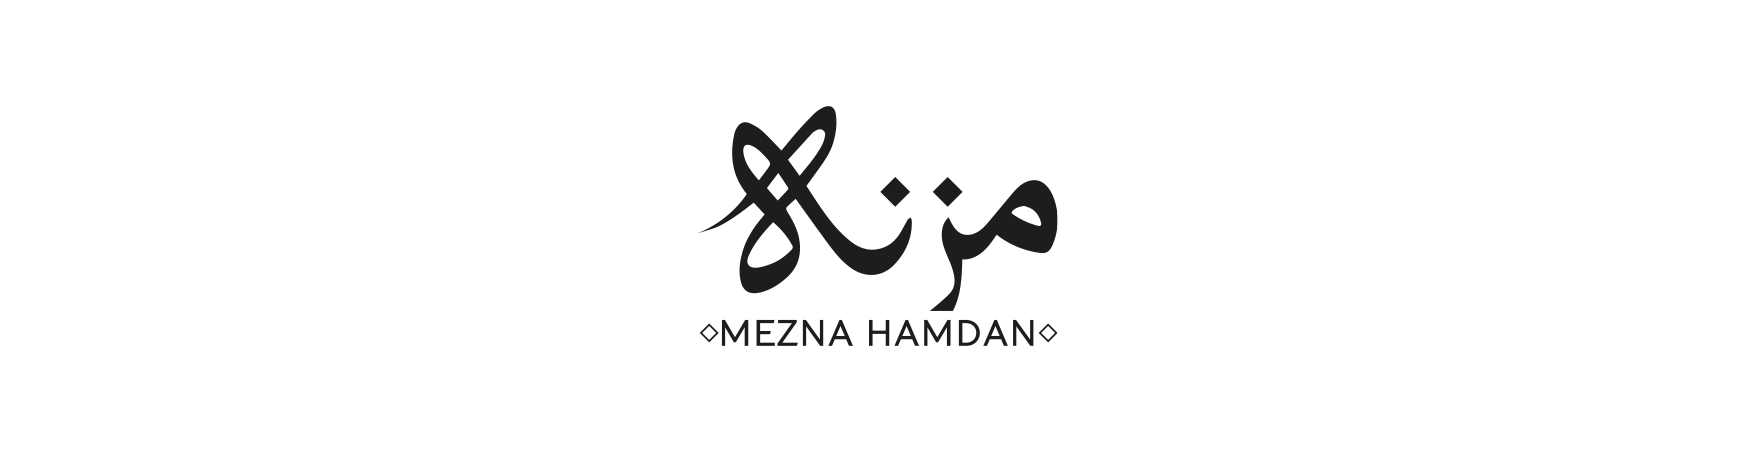 Mezna Hamdan